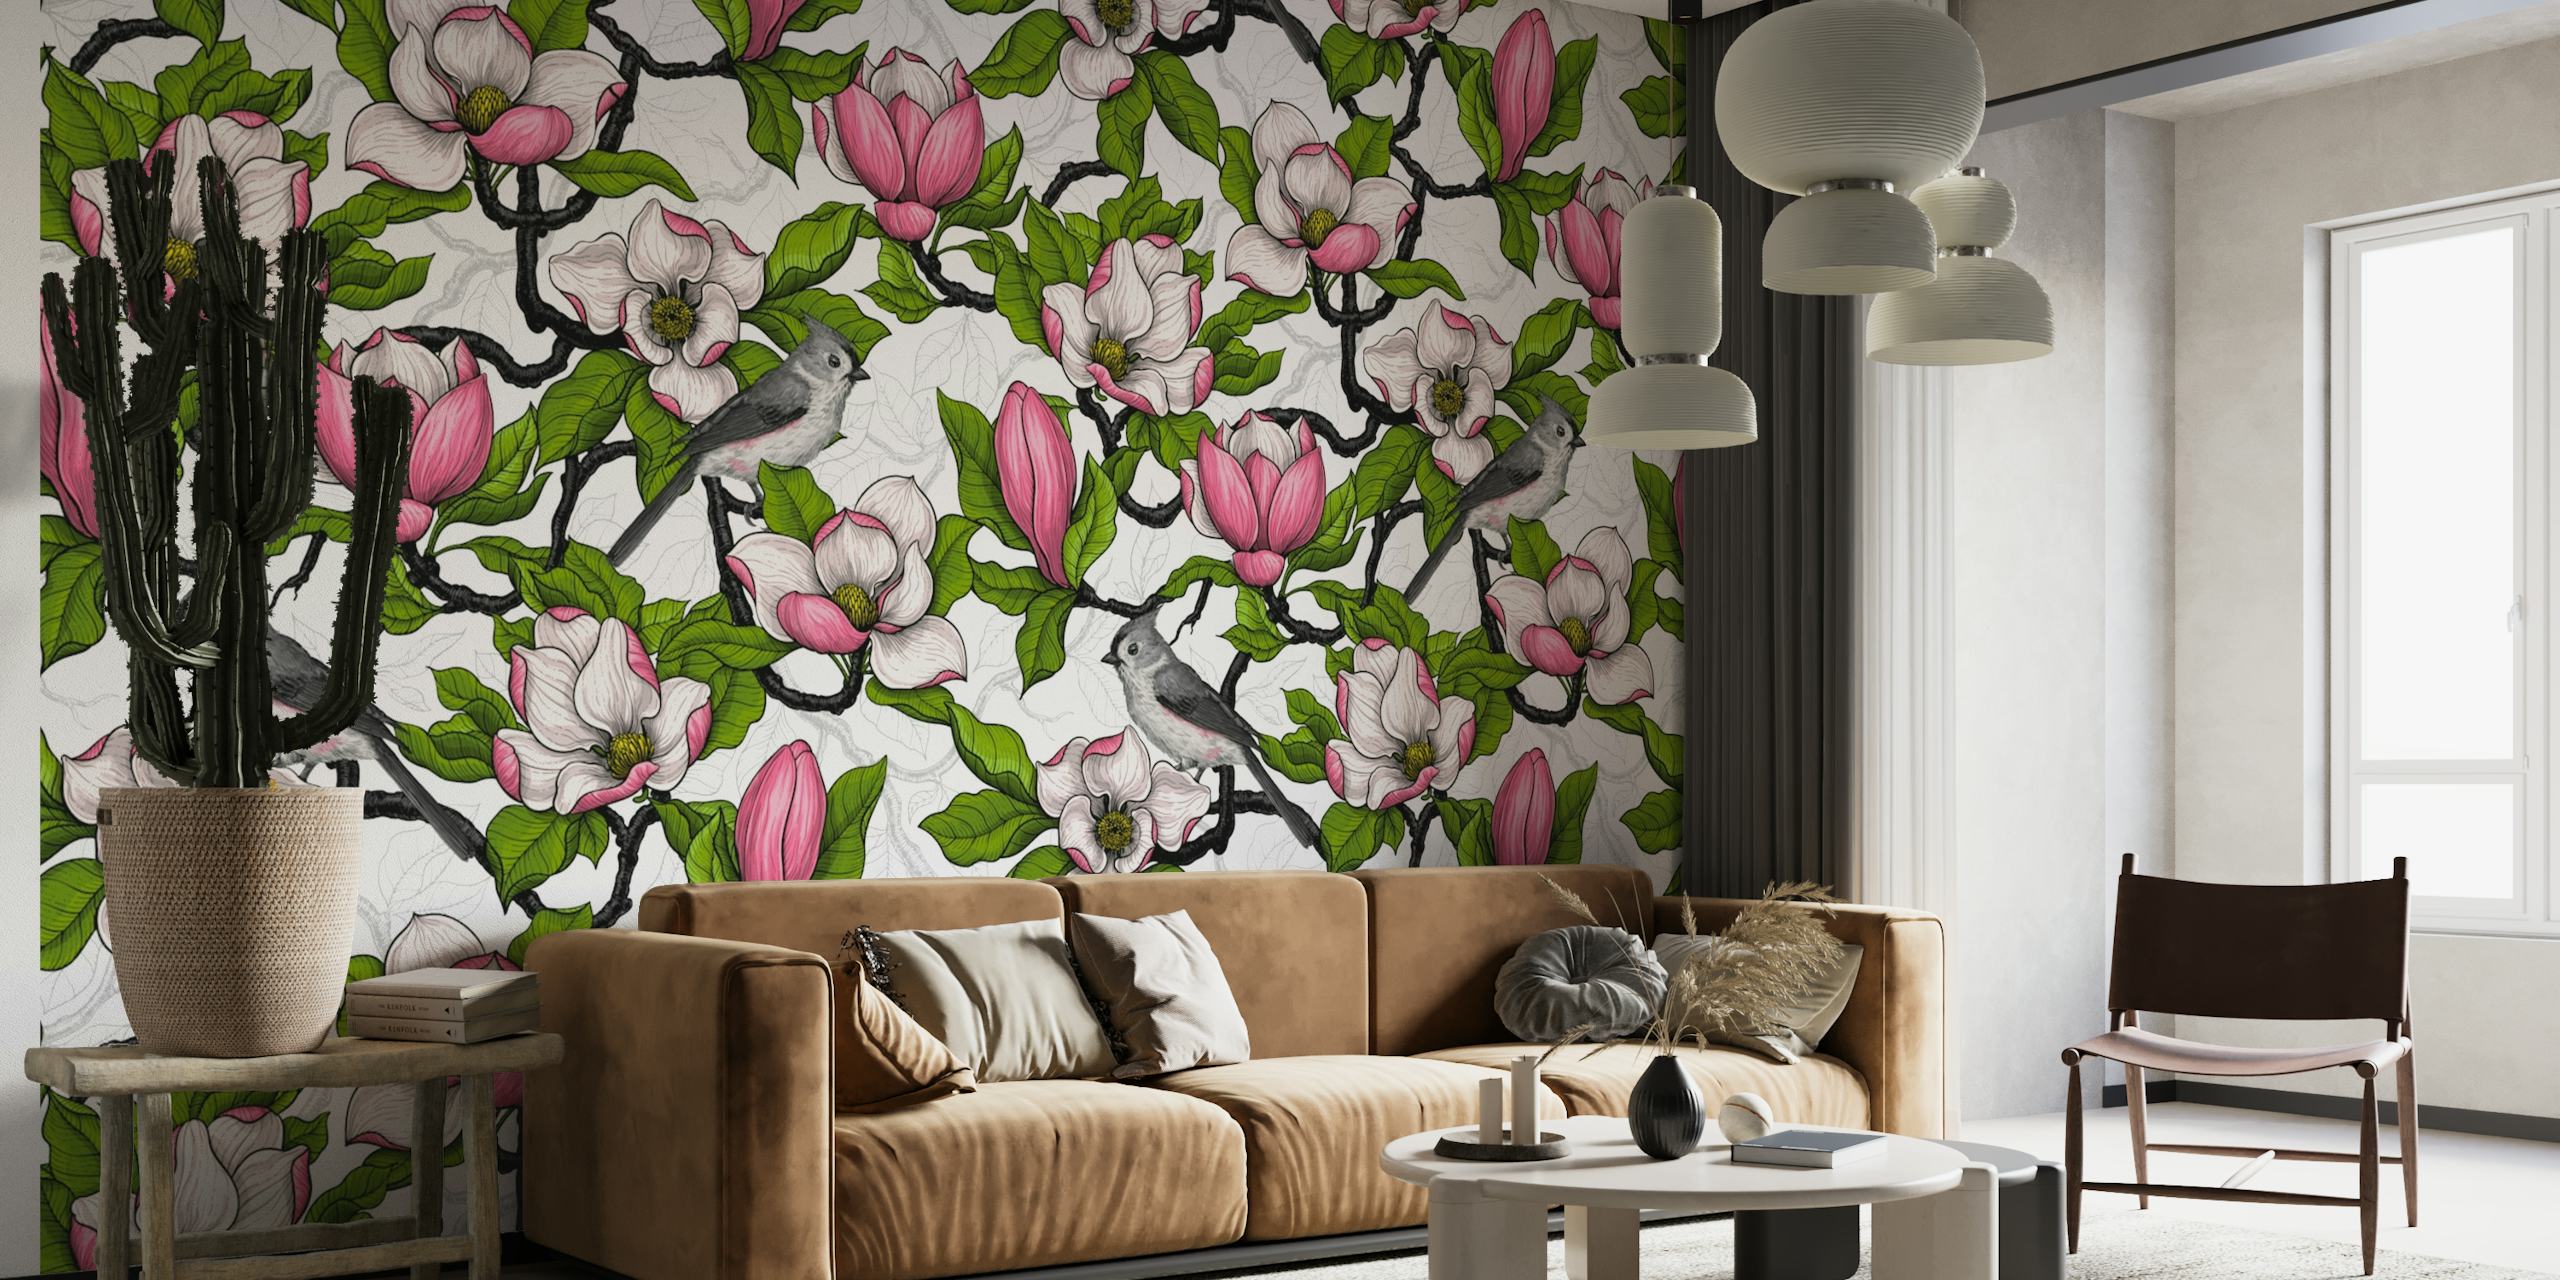 Blooming magnolia and bird behang